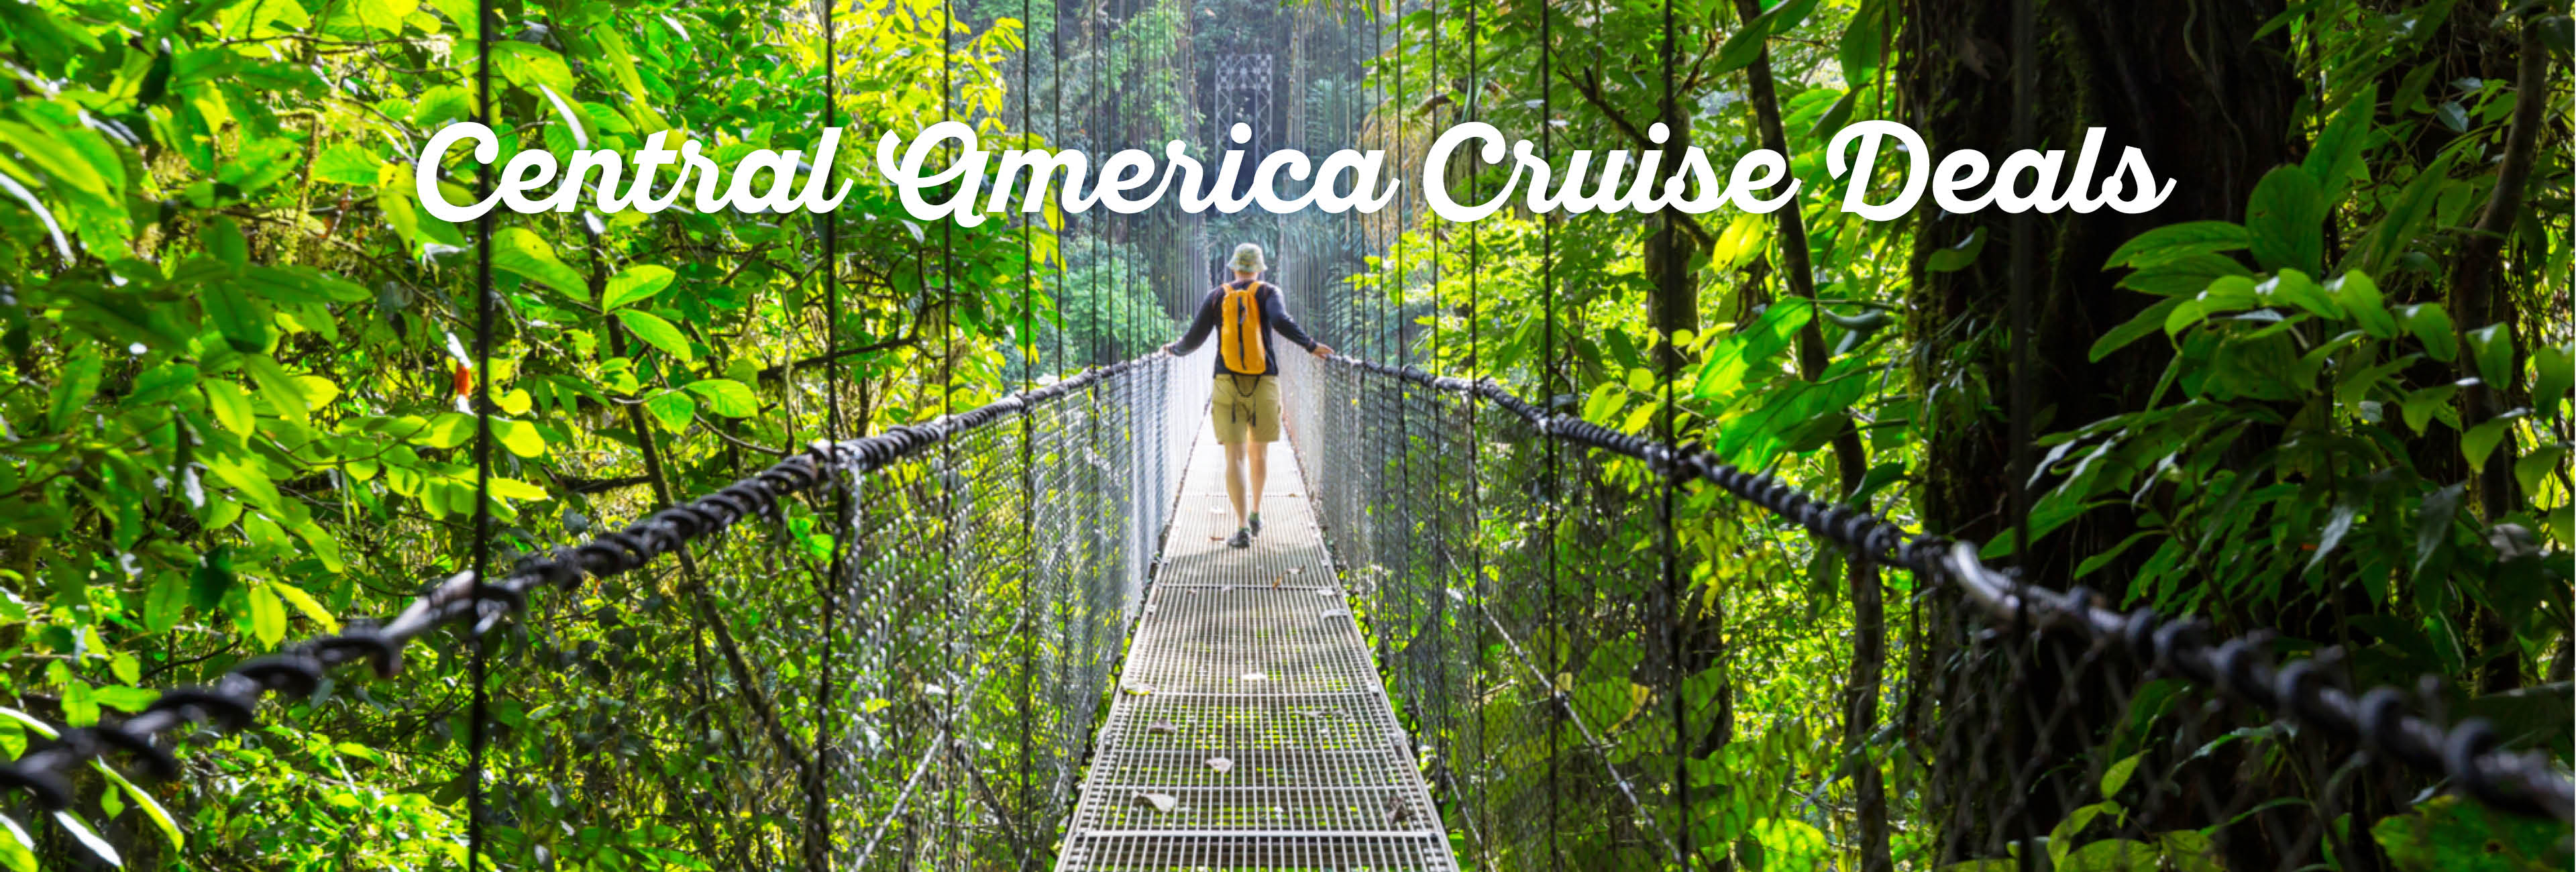 central-america-cruise-deals1.jpg